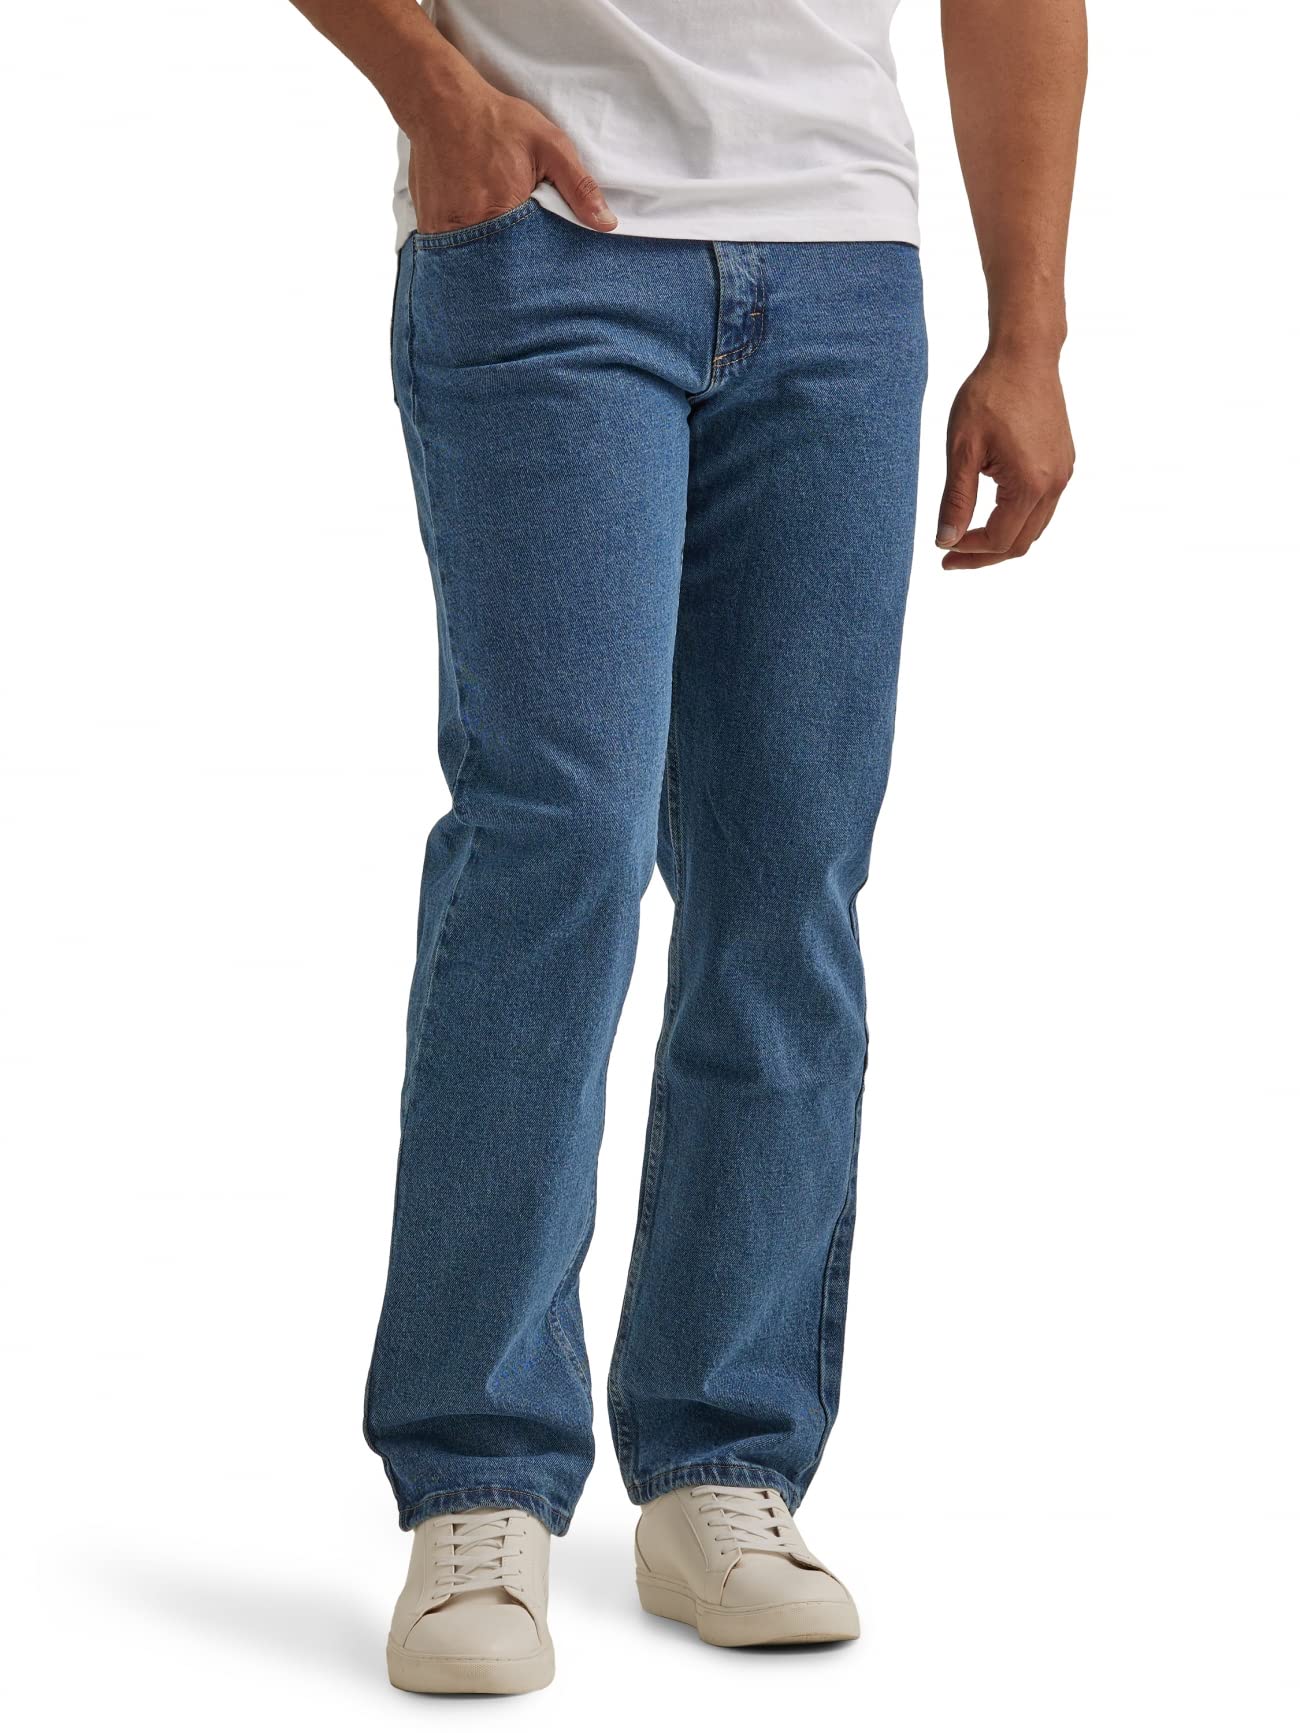 Wrangler Authentics Men's Classic 5-Pocket Relaxed Fit Jean, Dark Stonewash Flex, 36W x 30L